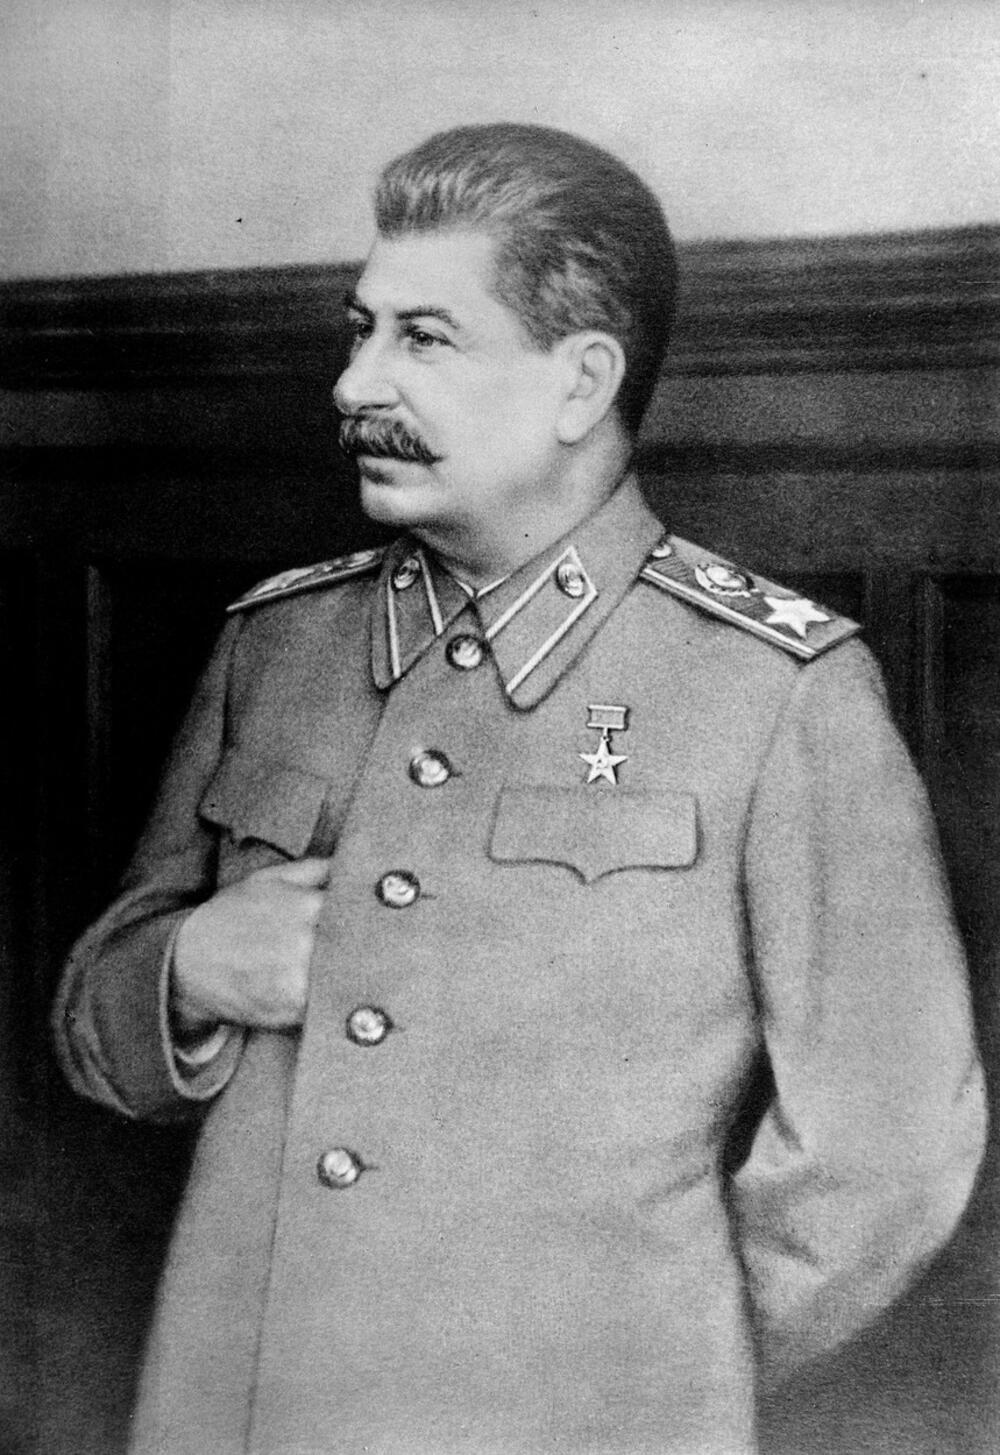 Josif Staljin